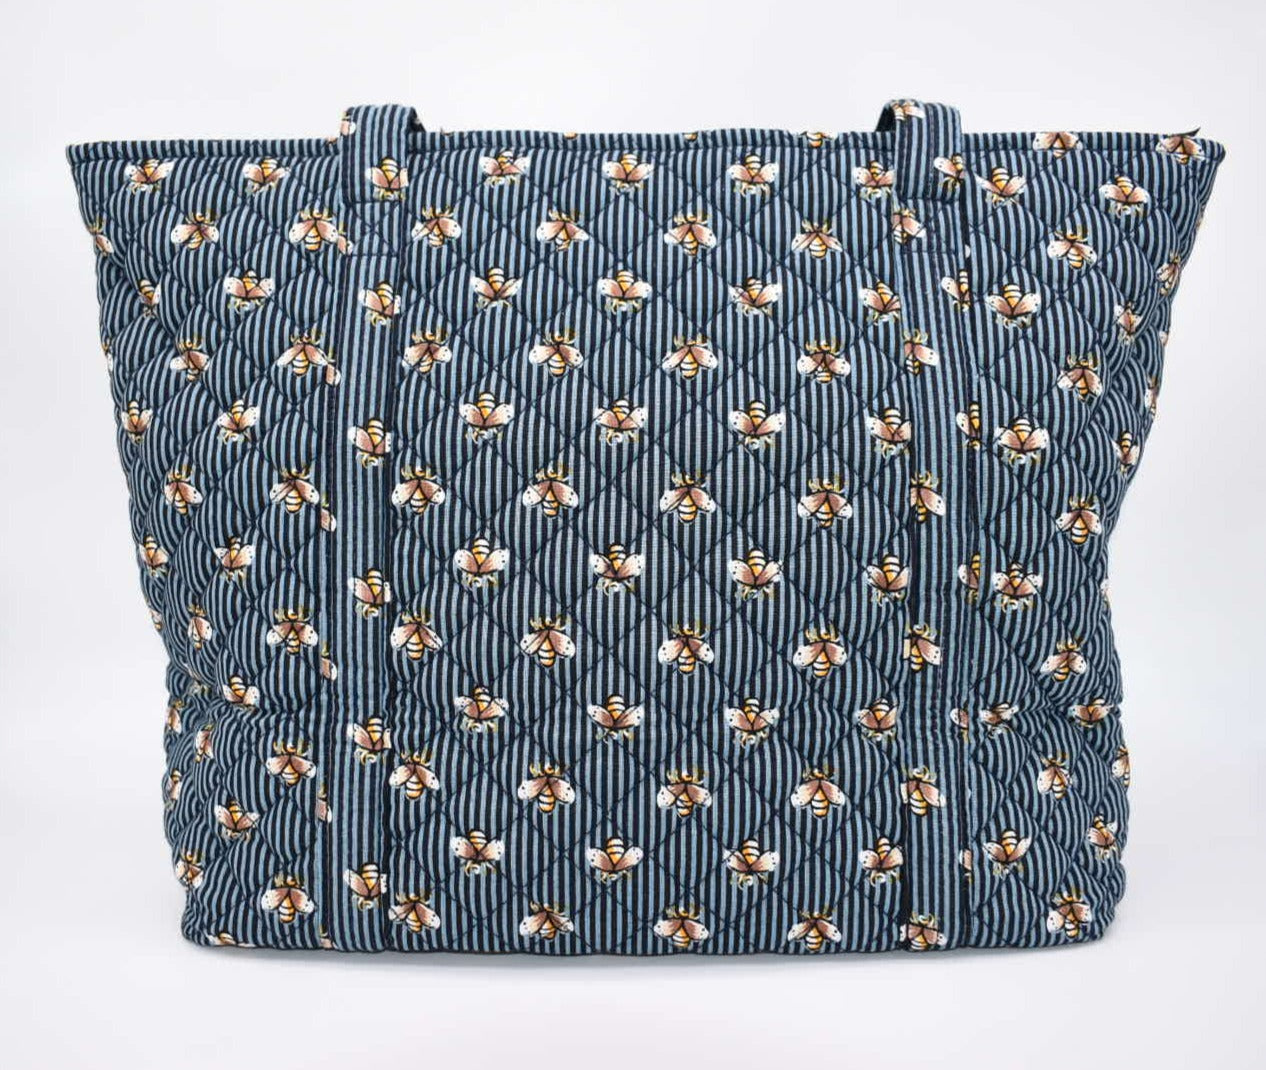 Vera Bradley Small Vera Tote Bag in "Bees Navy" Pattern